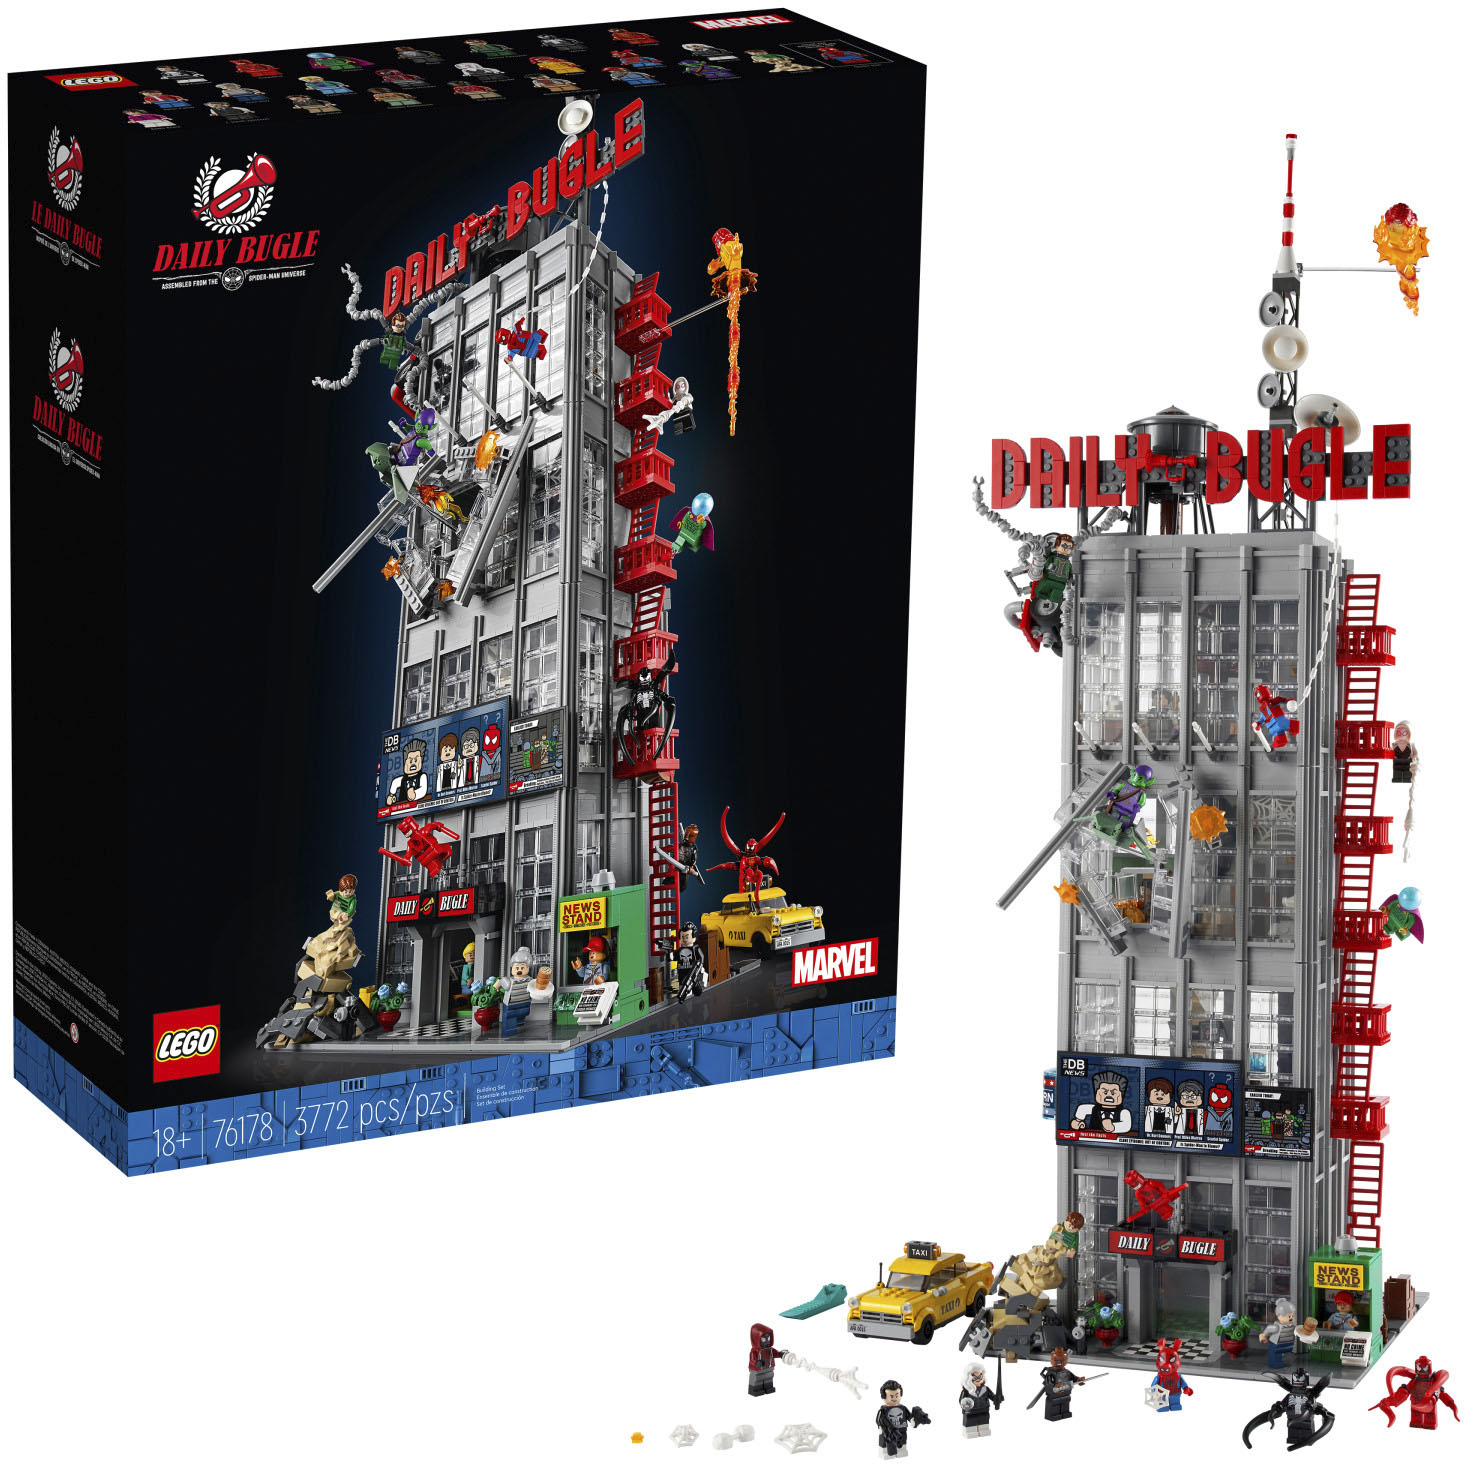 Lego 76178 Marvel Spider-Man Daily Bugle